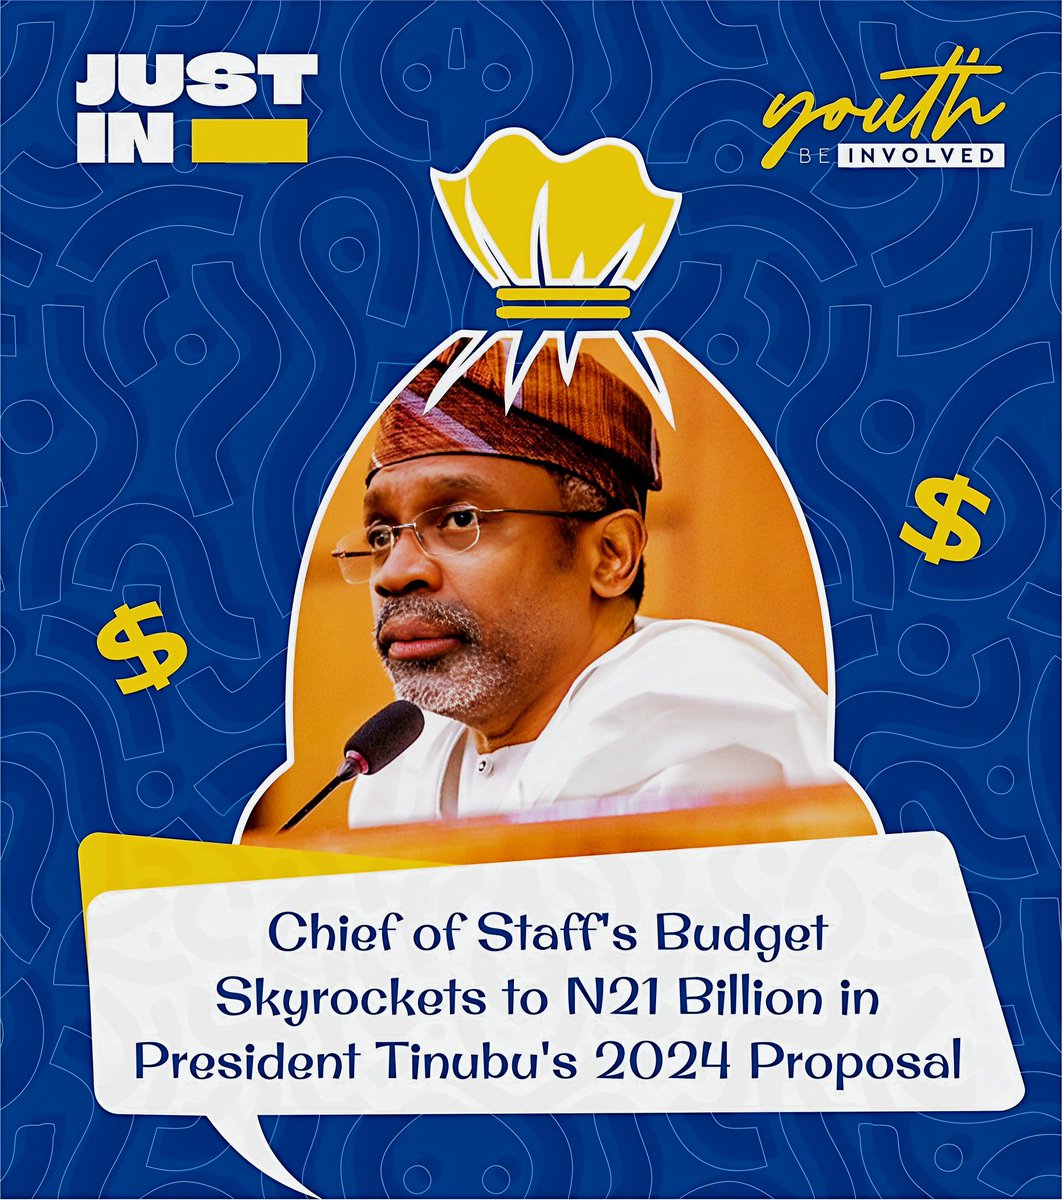 President Tinubu's proposed 2024 budget allocation of N21 billion for the Chief of Staff position has ignited widespread scrutiny and debate. 

#politics #news #tinubu #tinubu2023